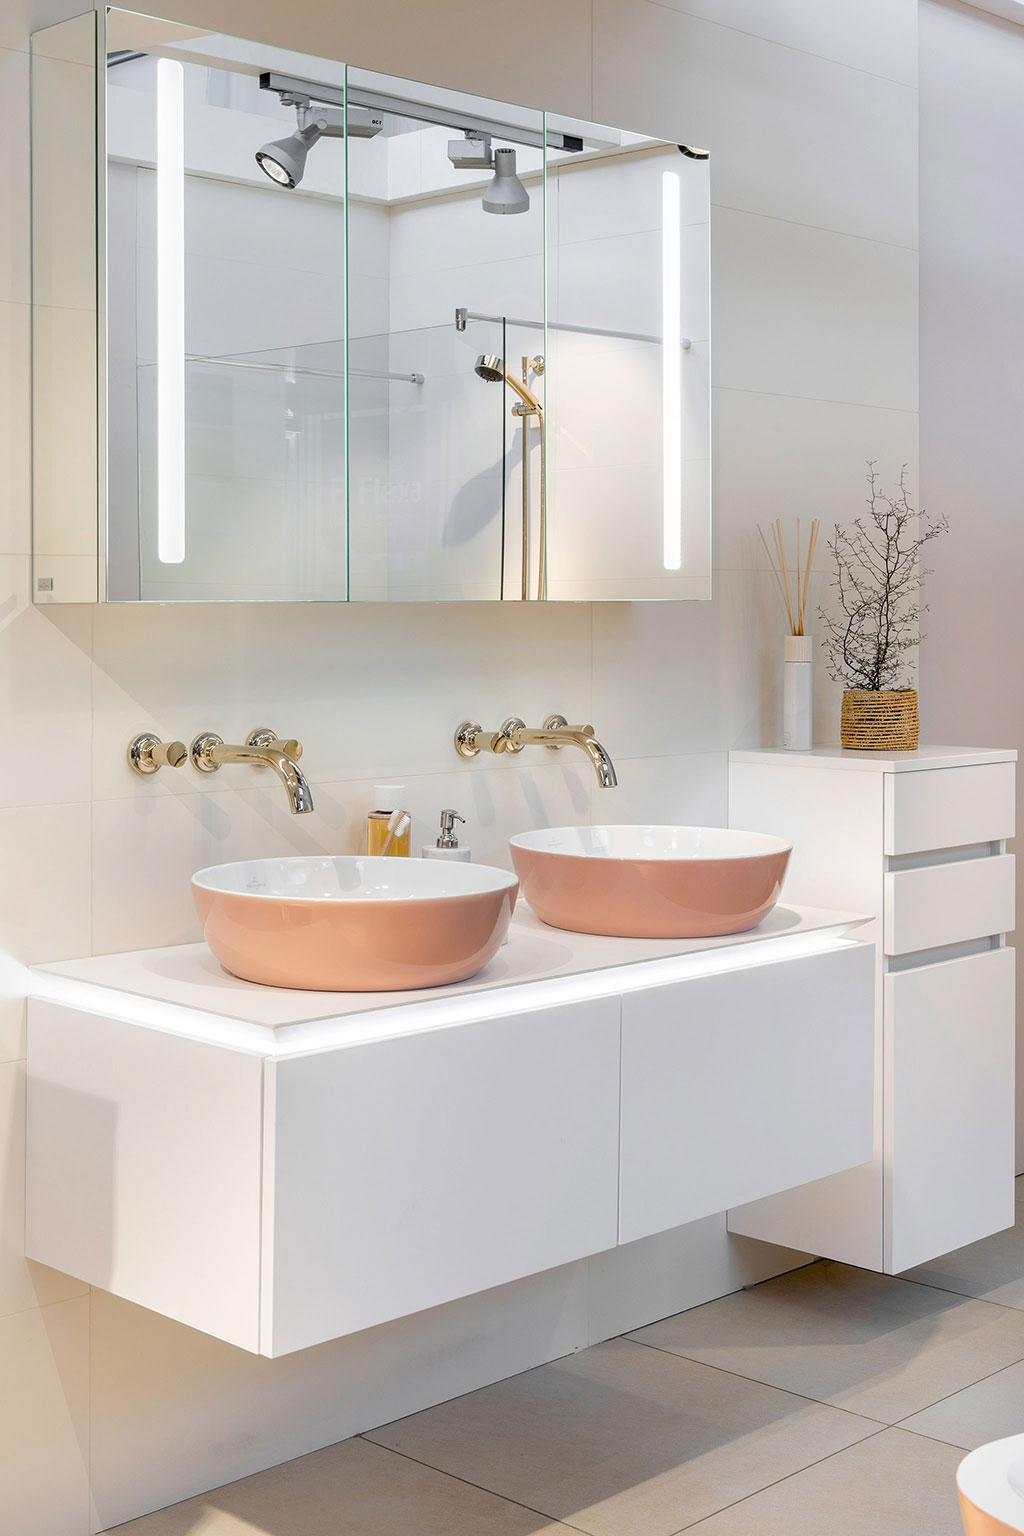 Ontdek welke badkamer bij jou past! | Stek Magazine